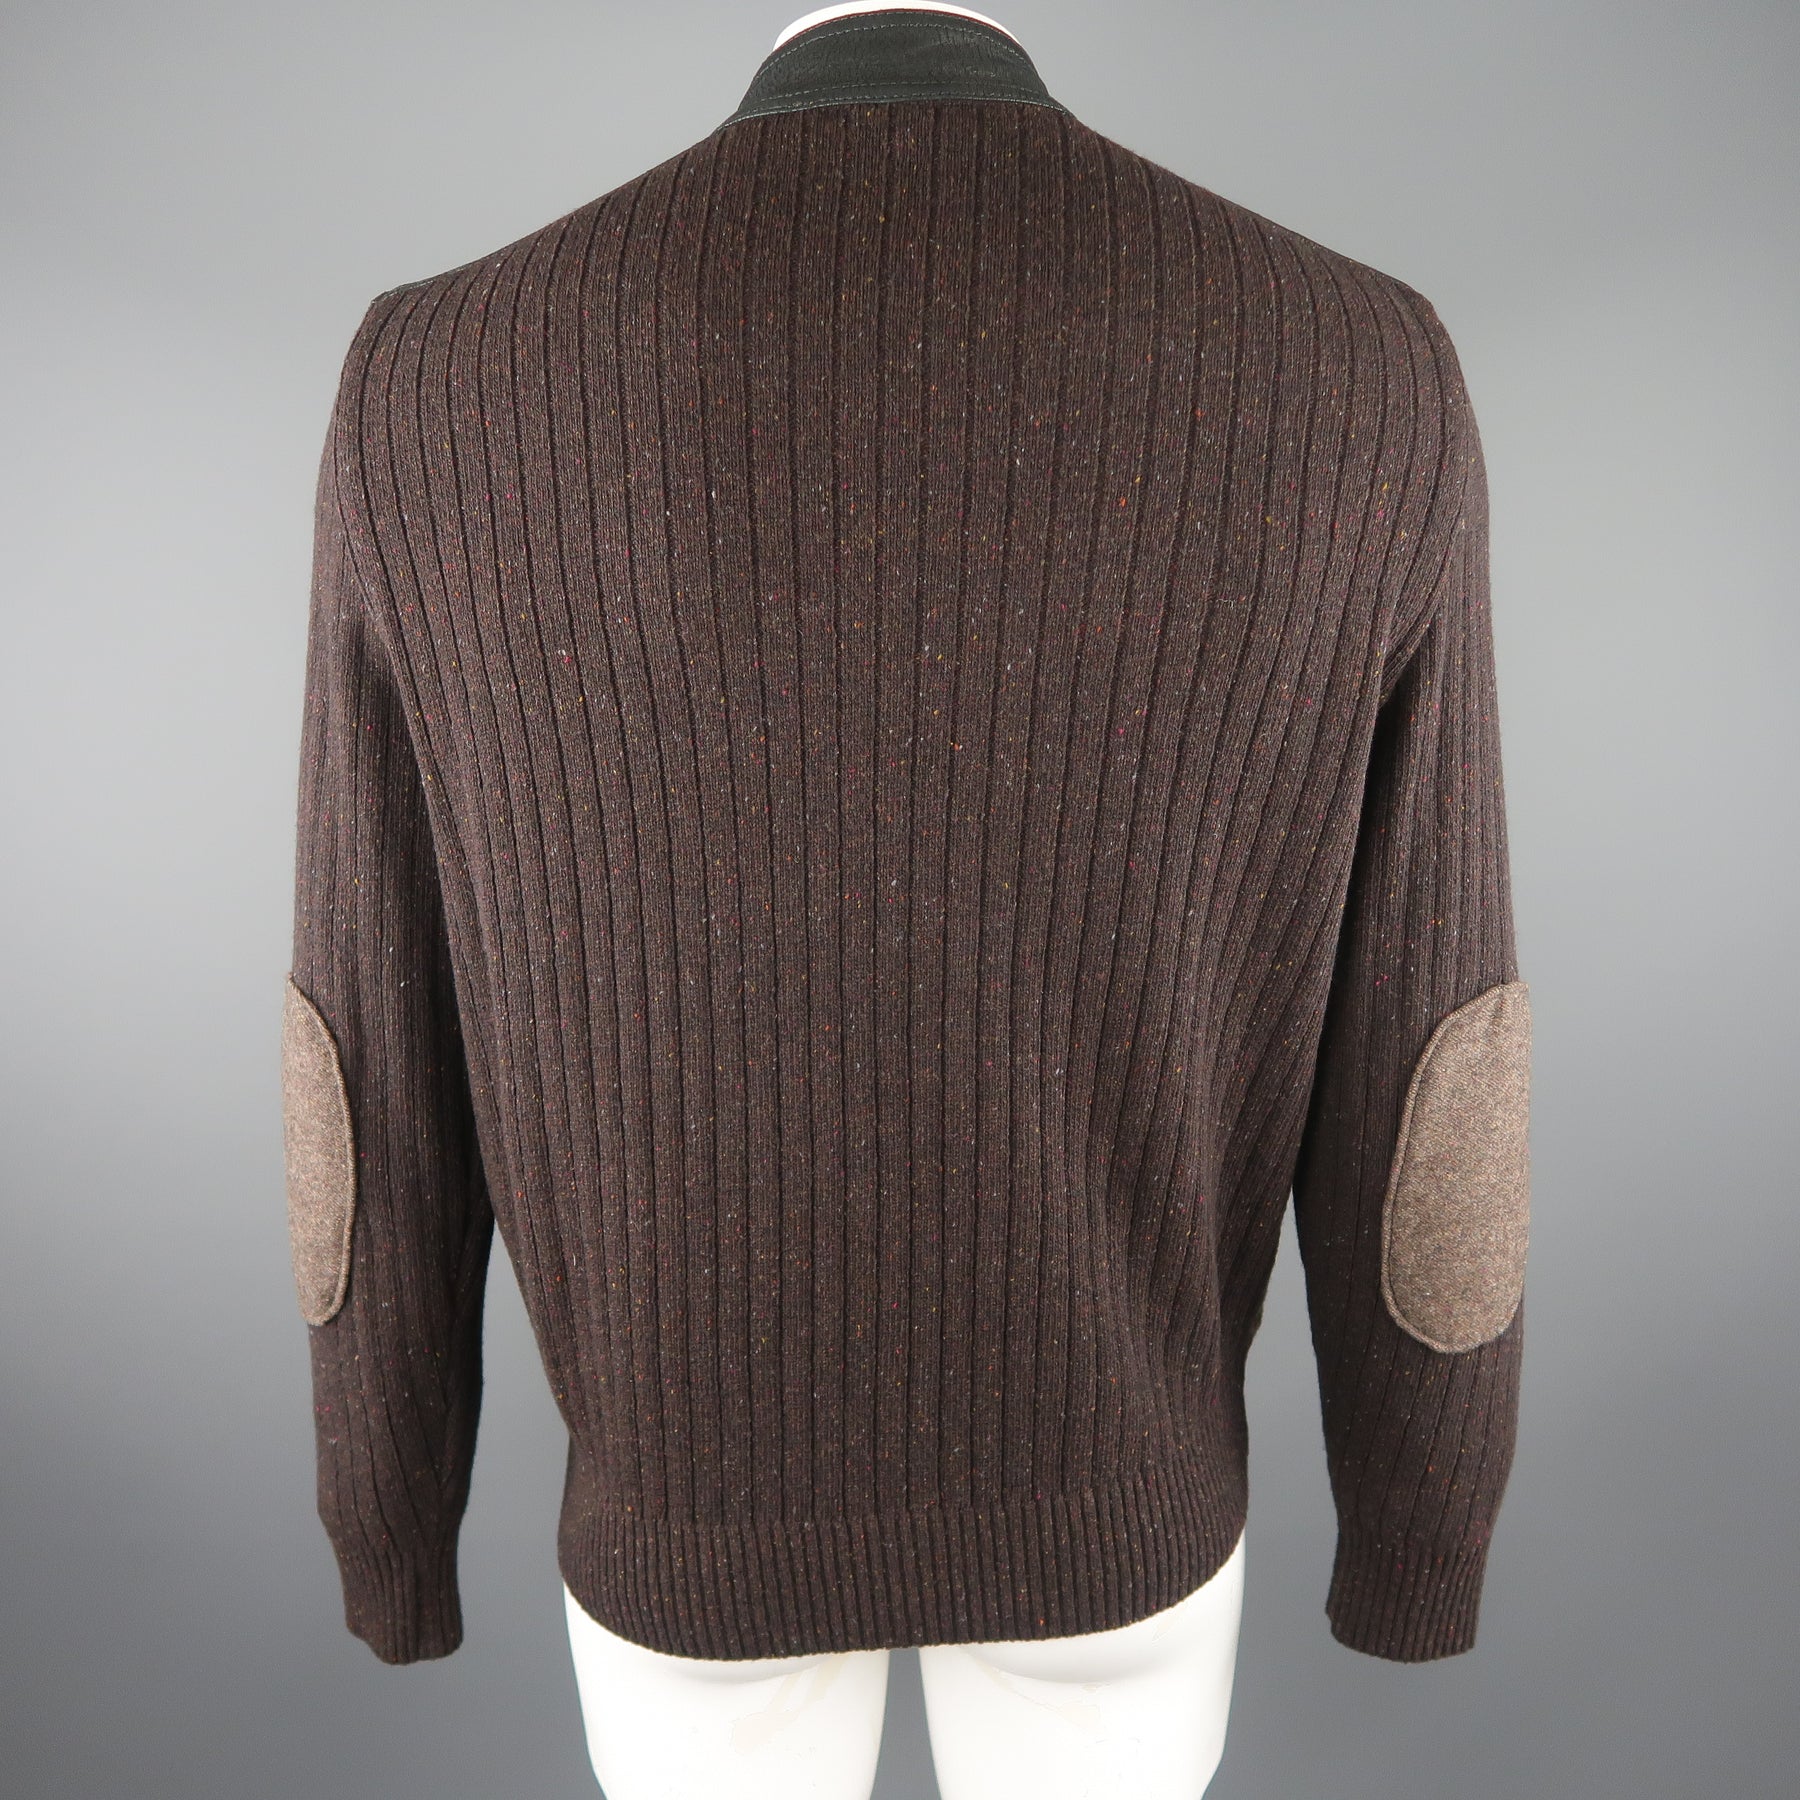 TORRAS Brown Sweater Jacket G48912